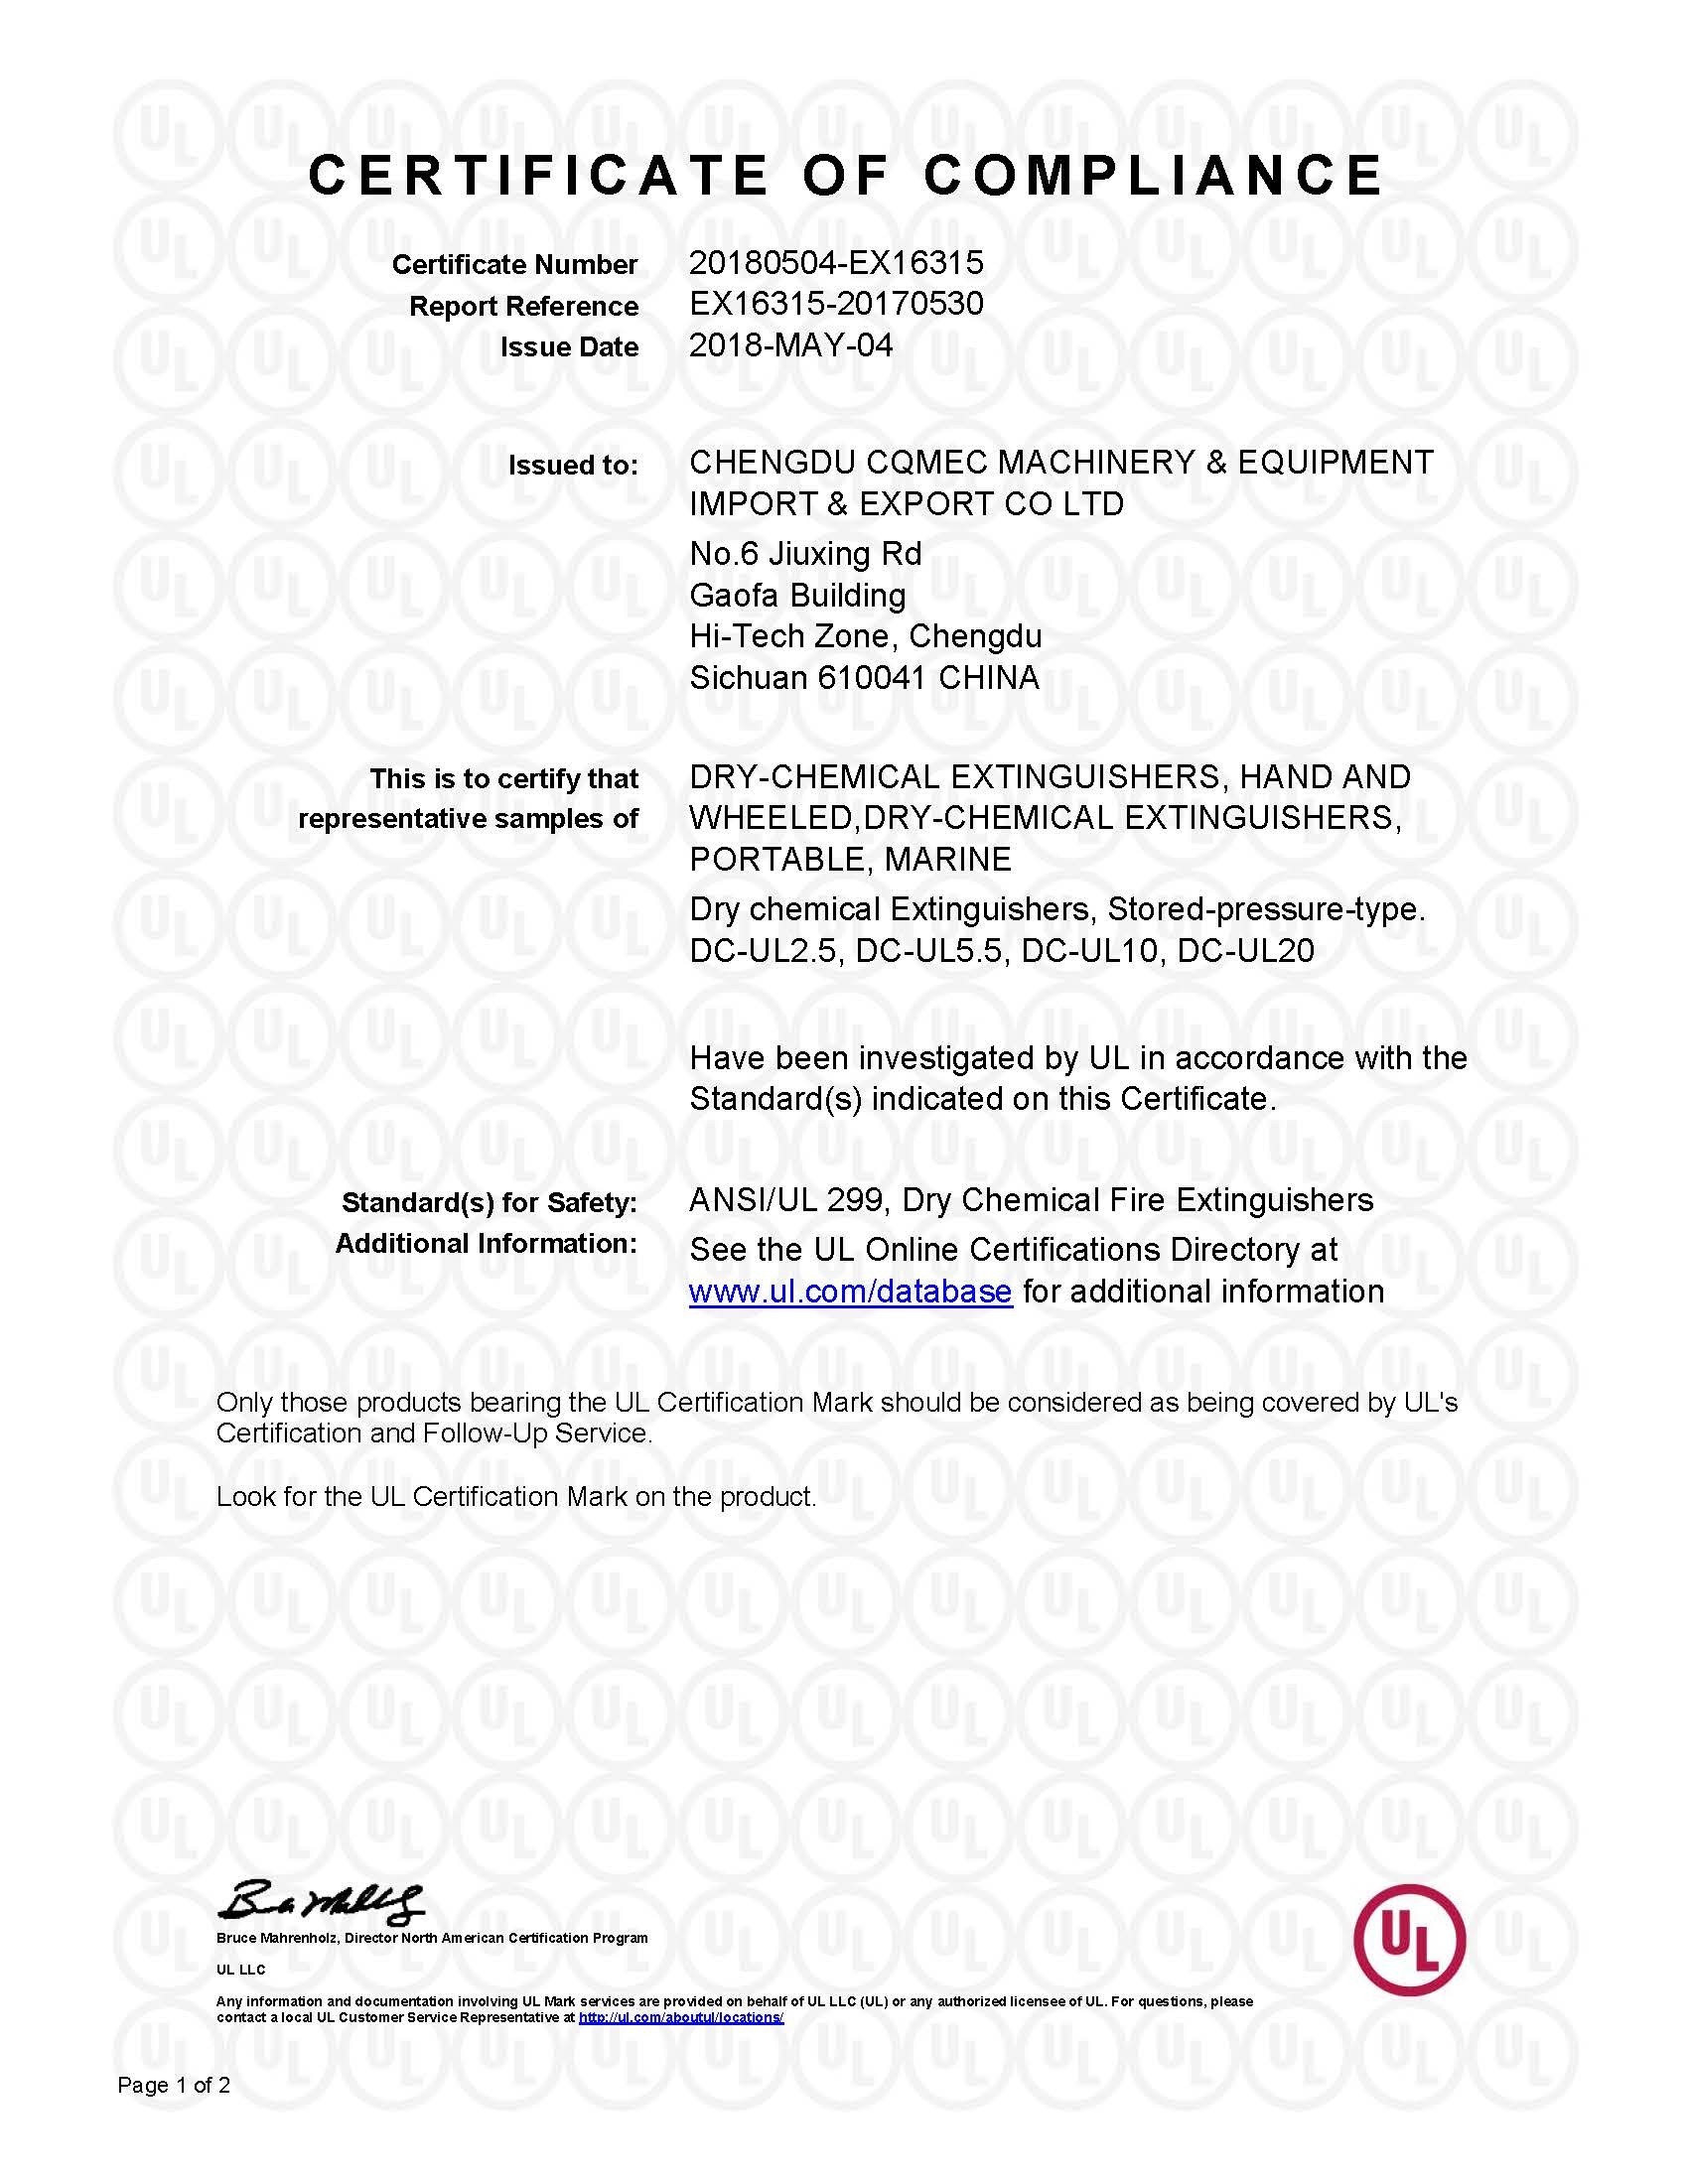 China Chengdu CQMEC Machinery &amp; Equipment Co., Ltd  Certification